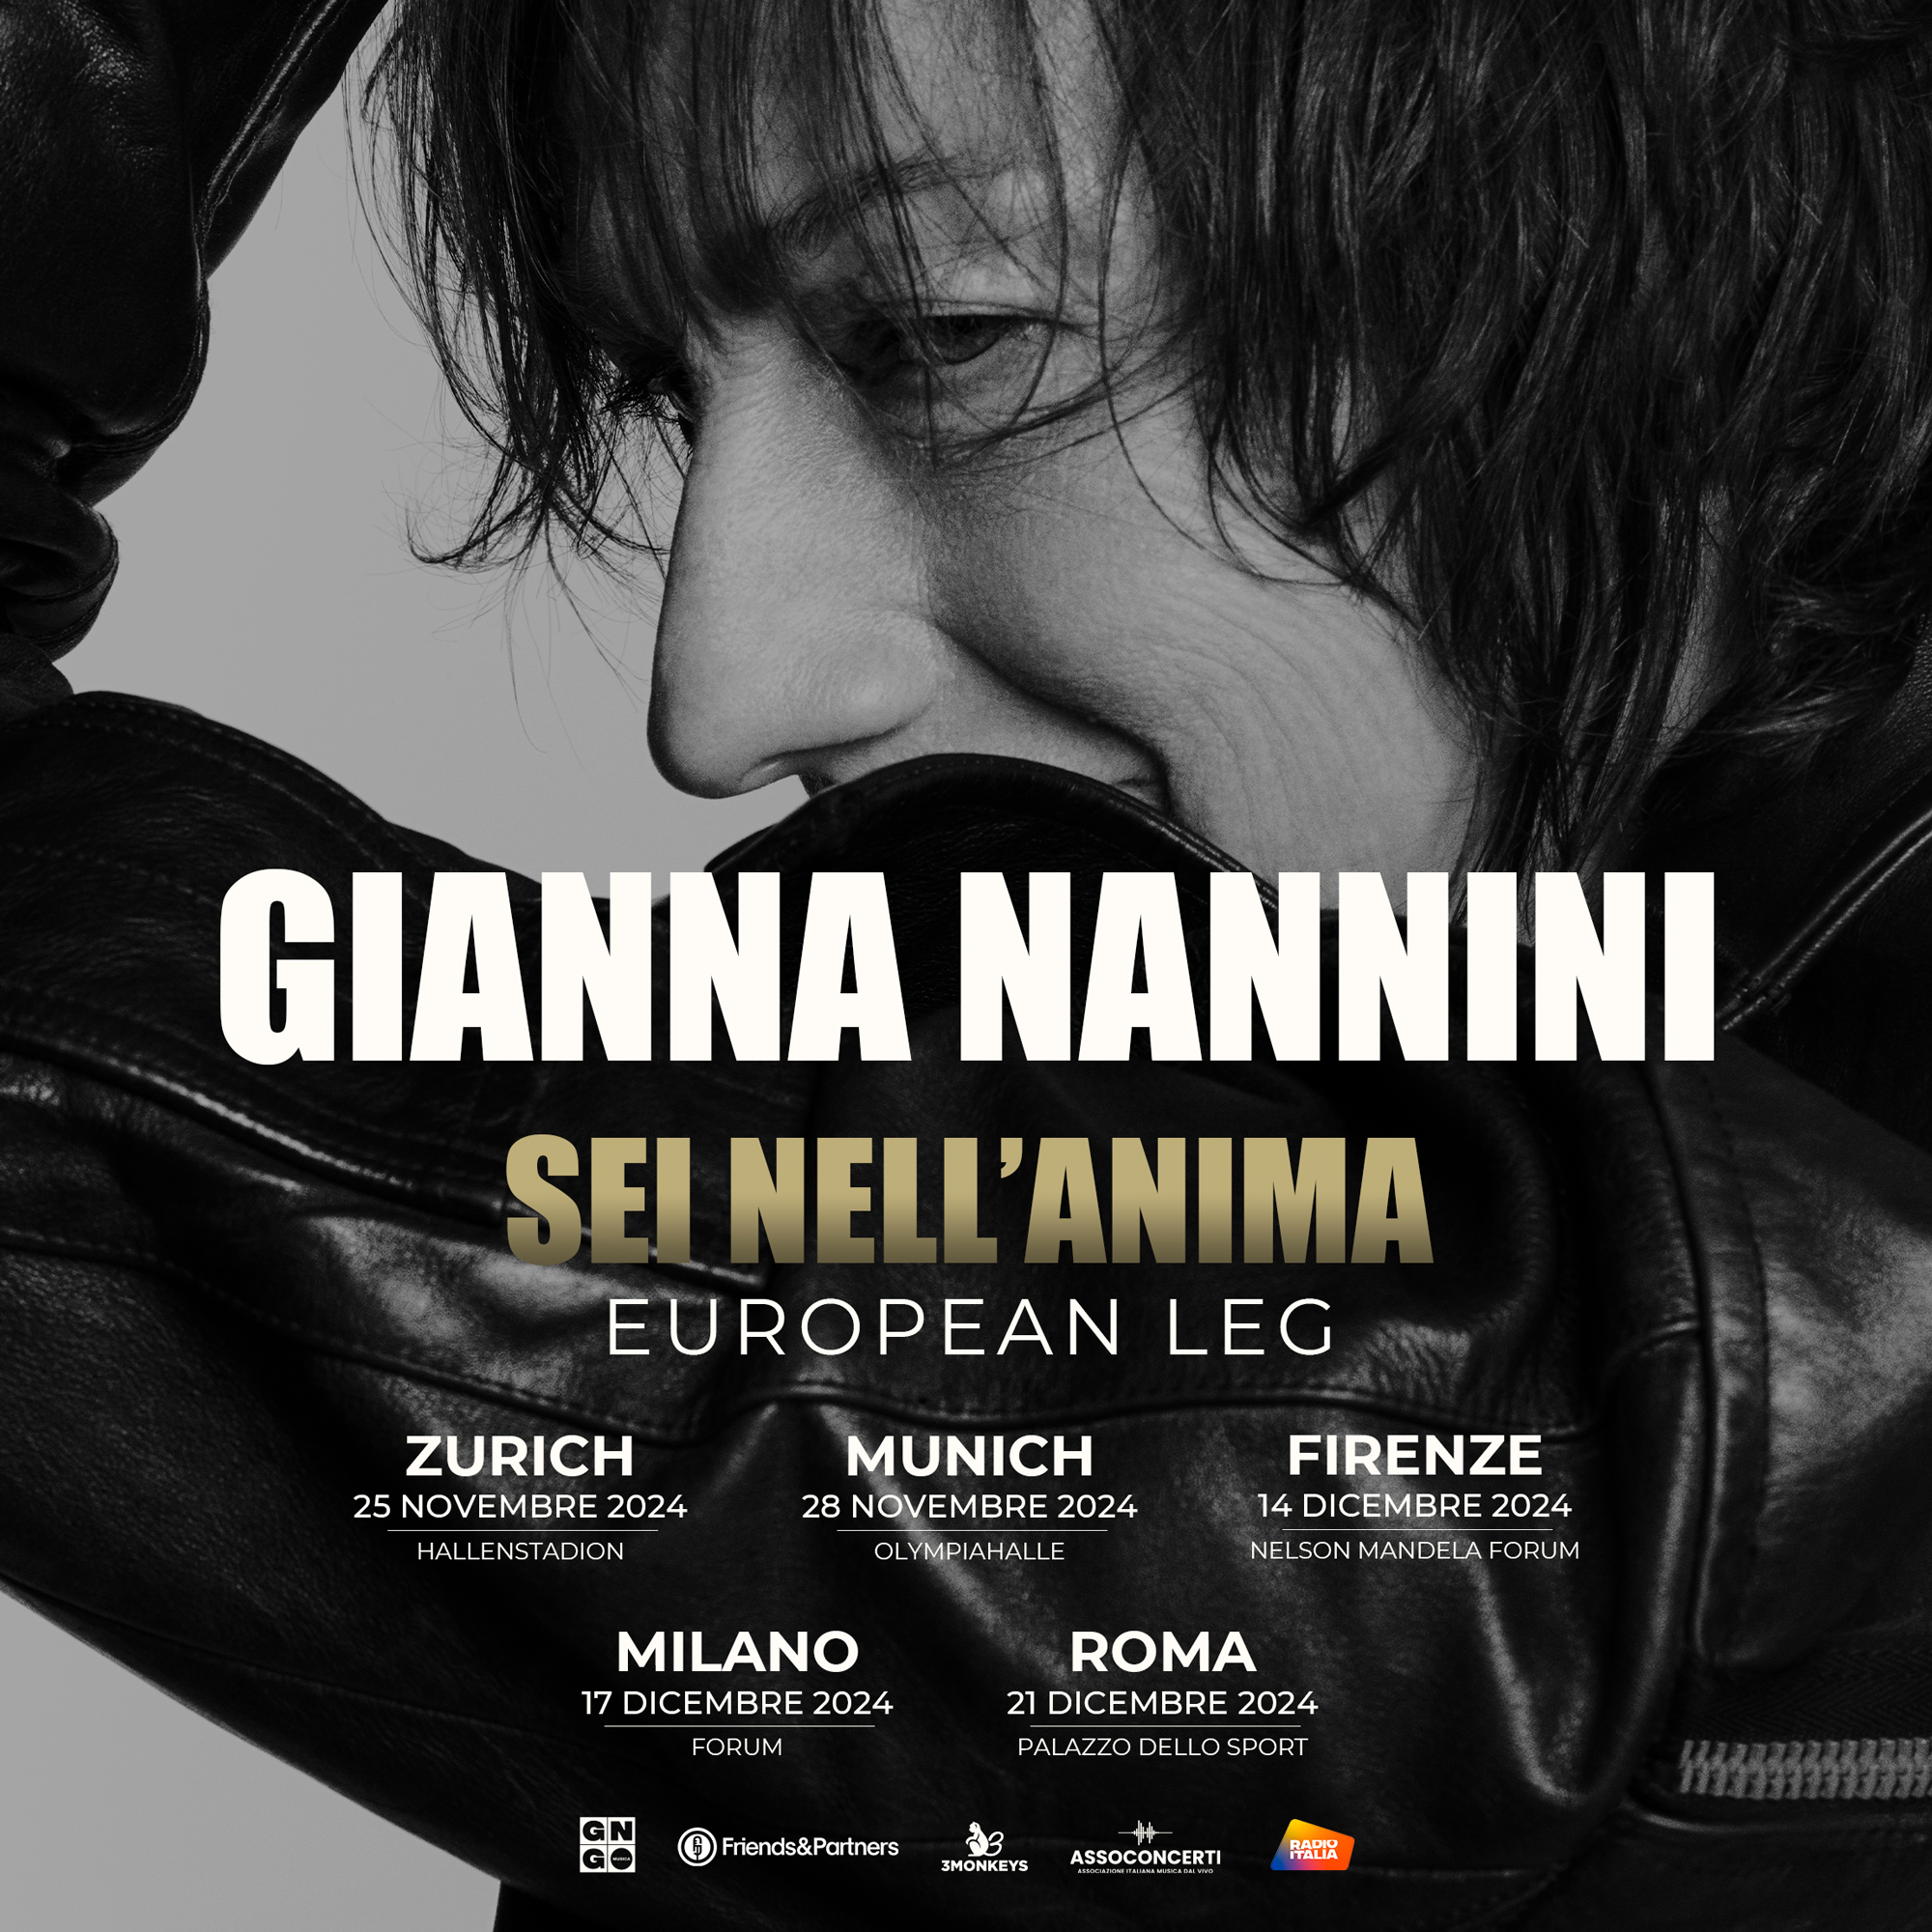 Gianna Nannini - Sei Nell'anima at Swiss Life Hall Tickets